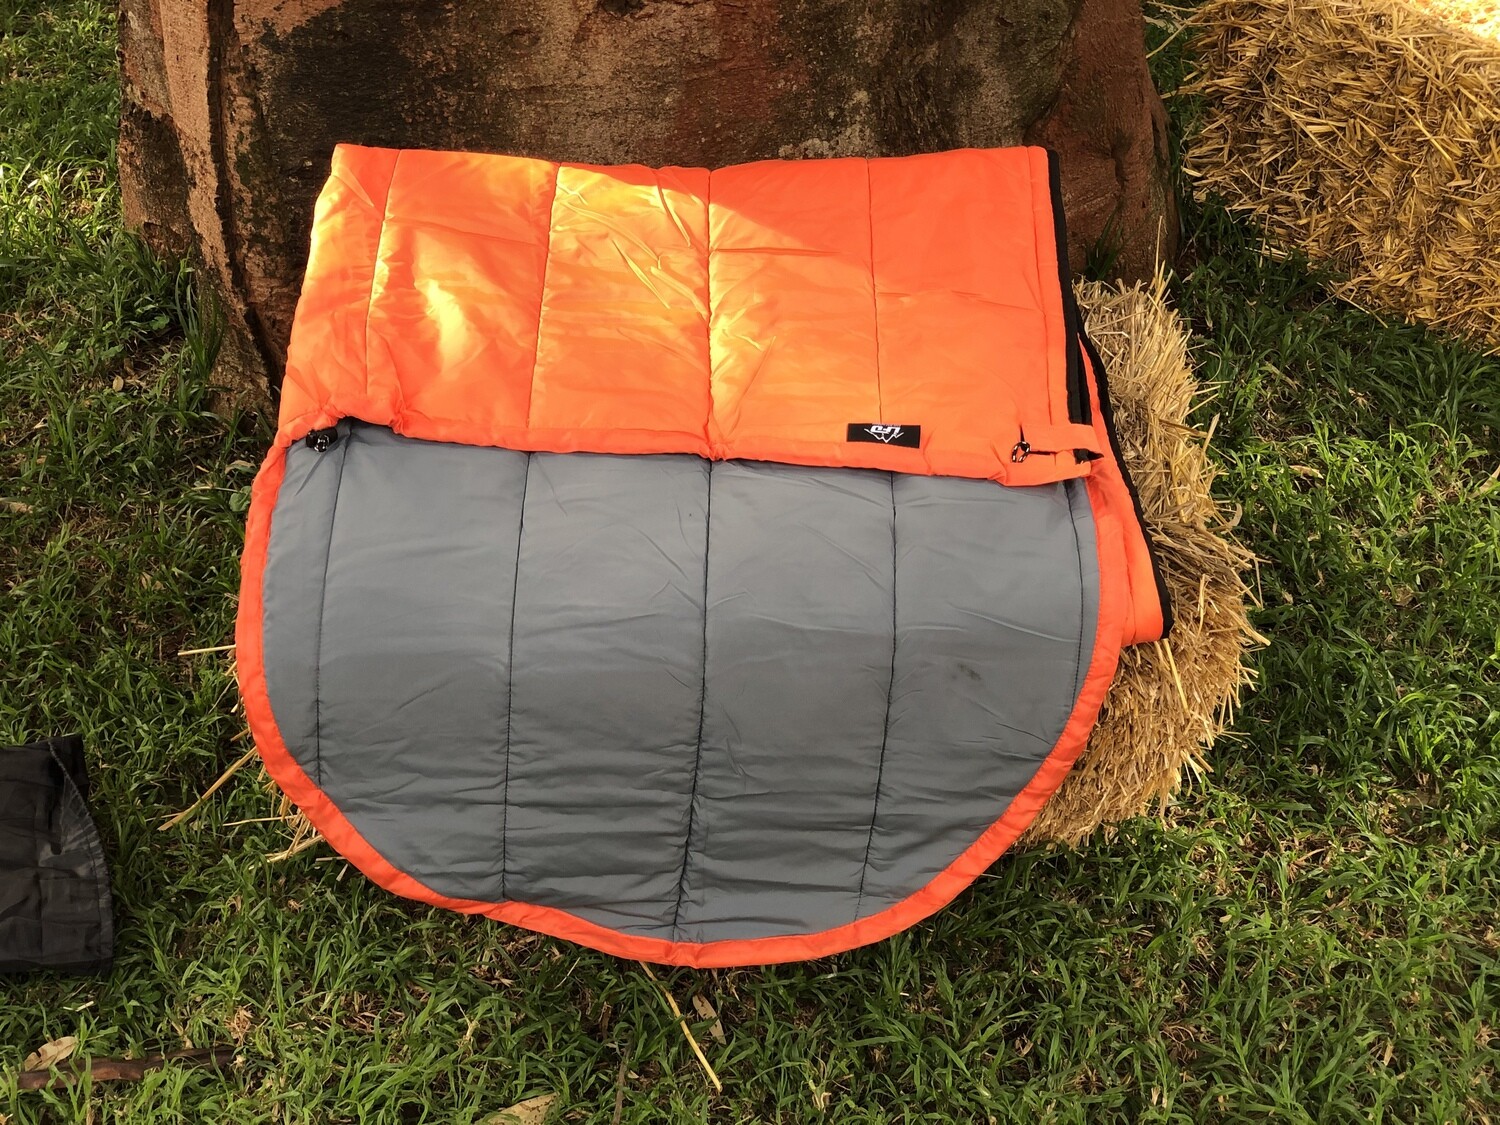 Generic adult outdoor Camping sleeping bag